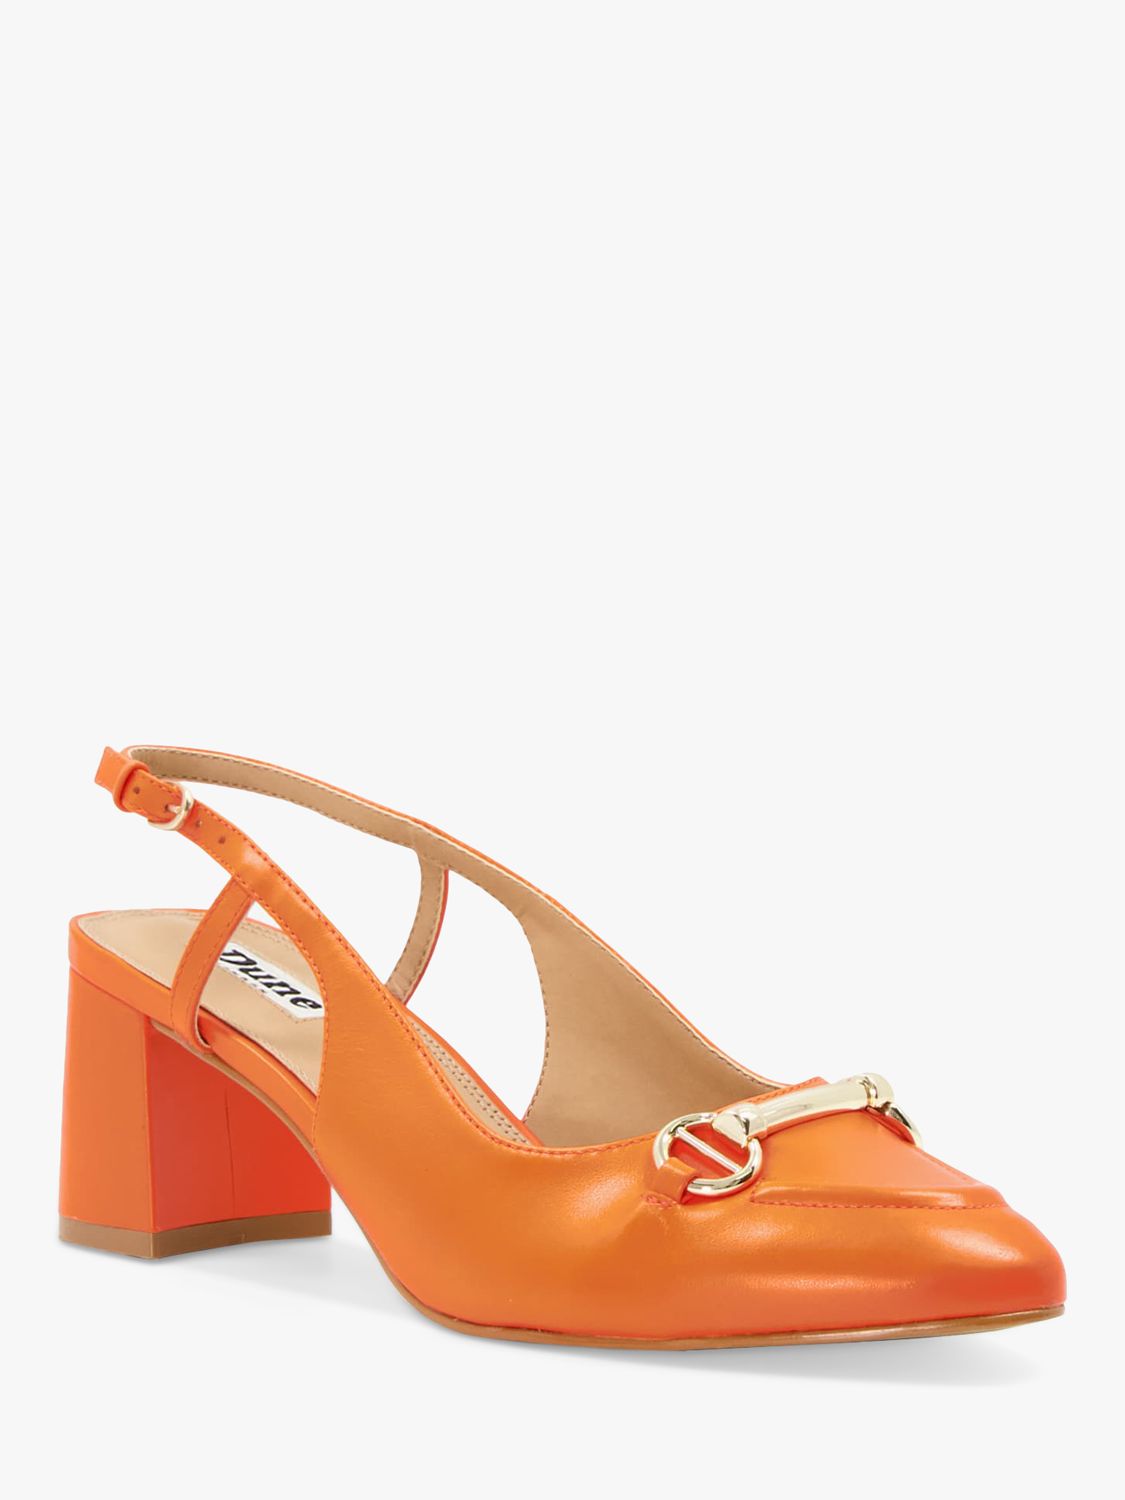 Dune Cassie Leather Slingback Court Shoes, Orange at John Lewis & Partners